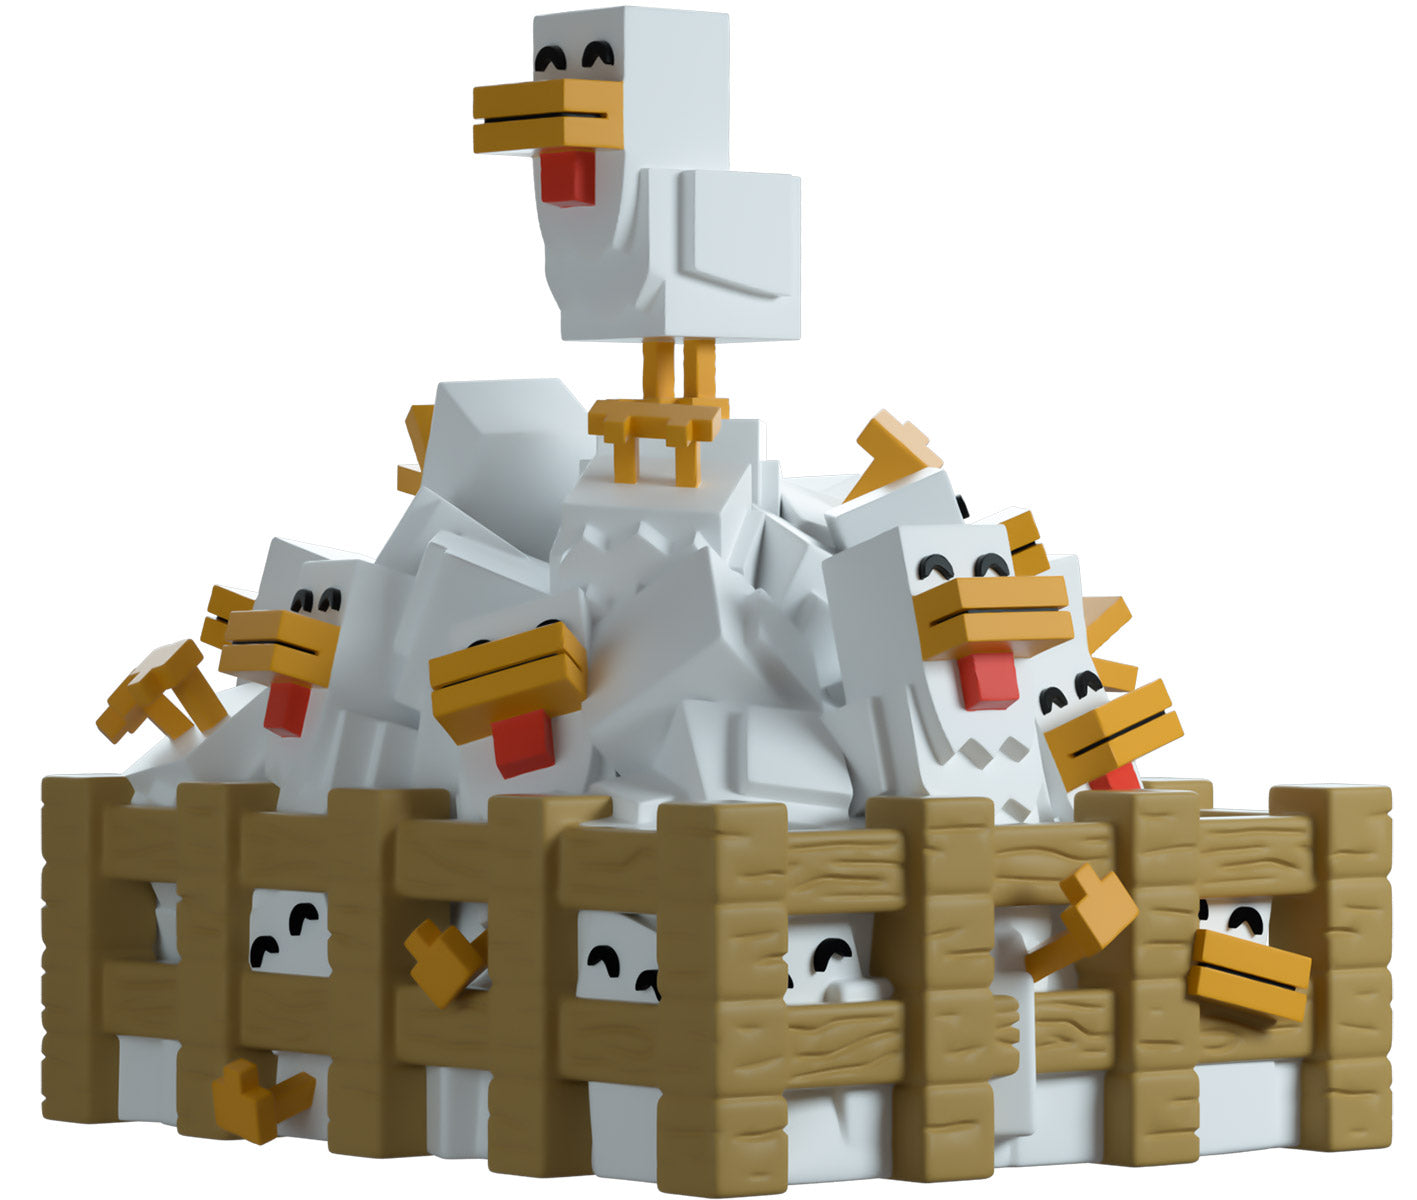 Youtooz Games: Minecraft - Chickens